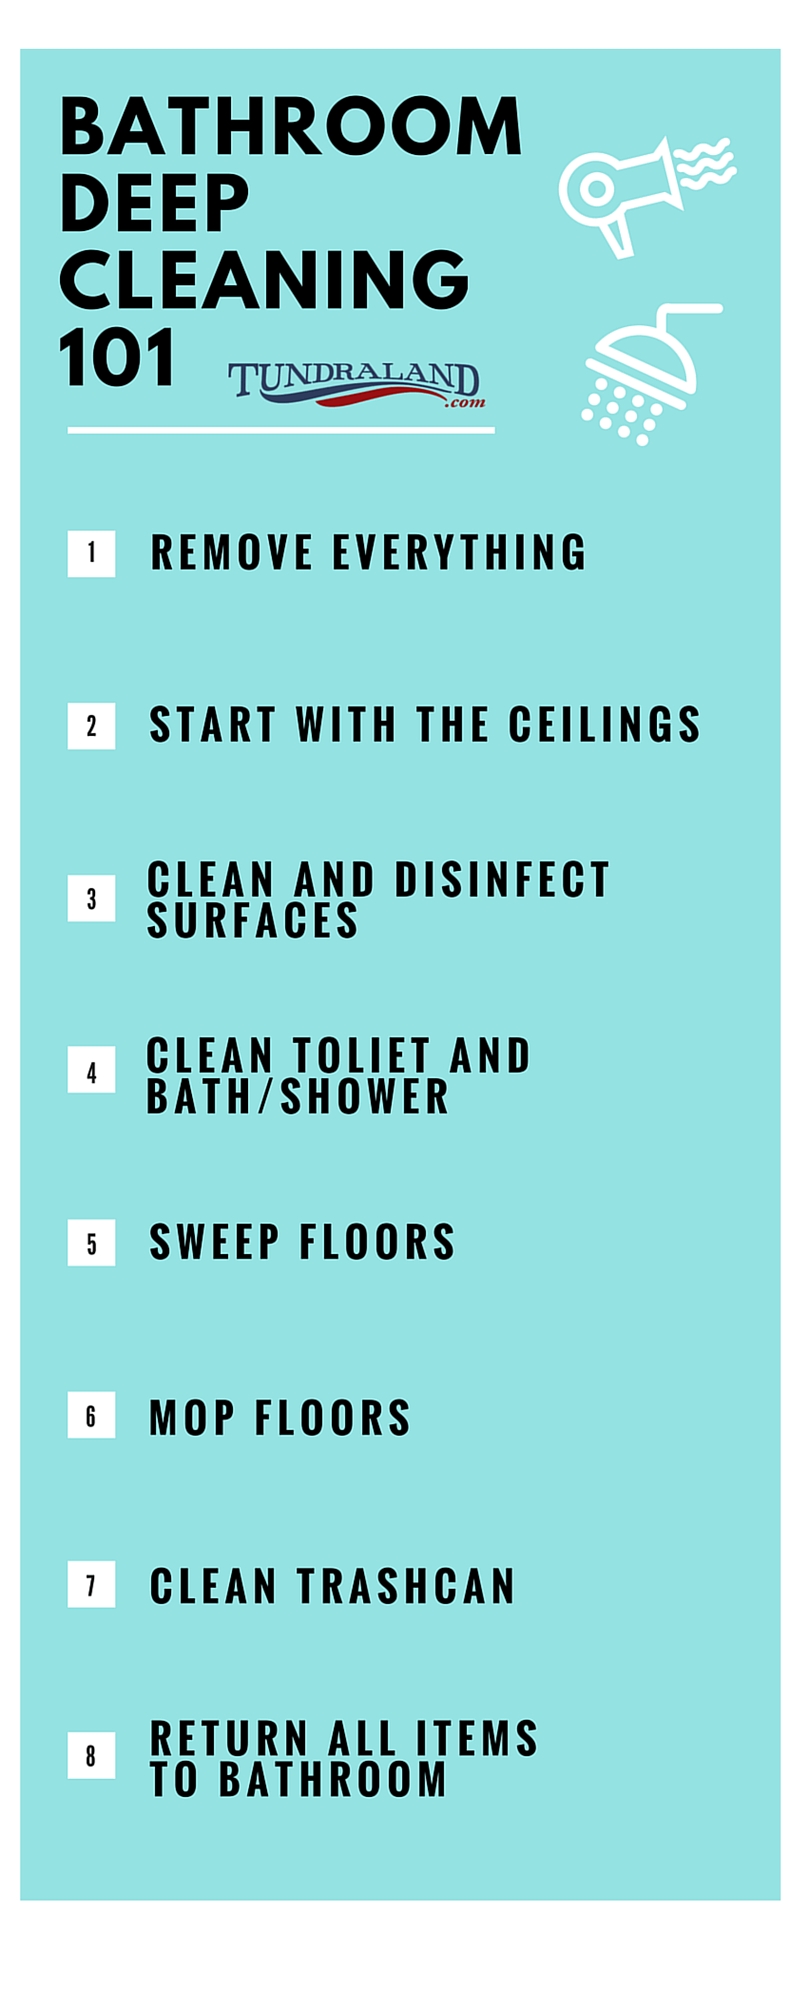 How to deep clean a bathroom